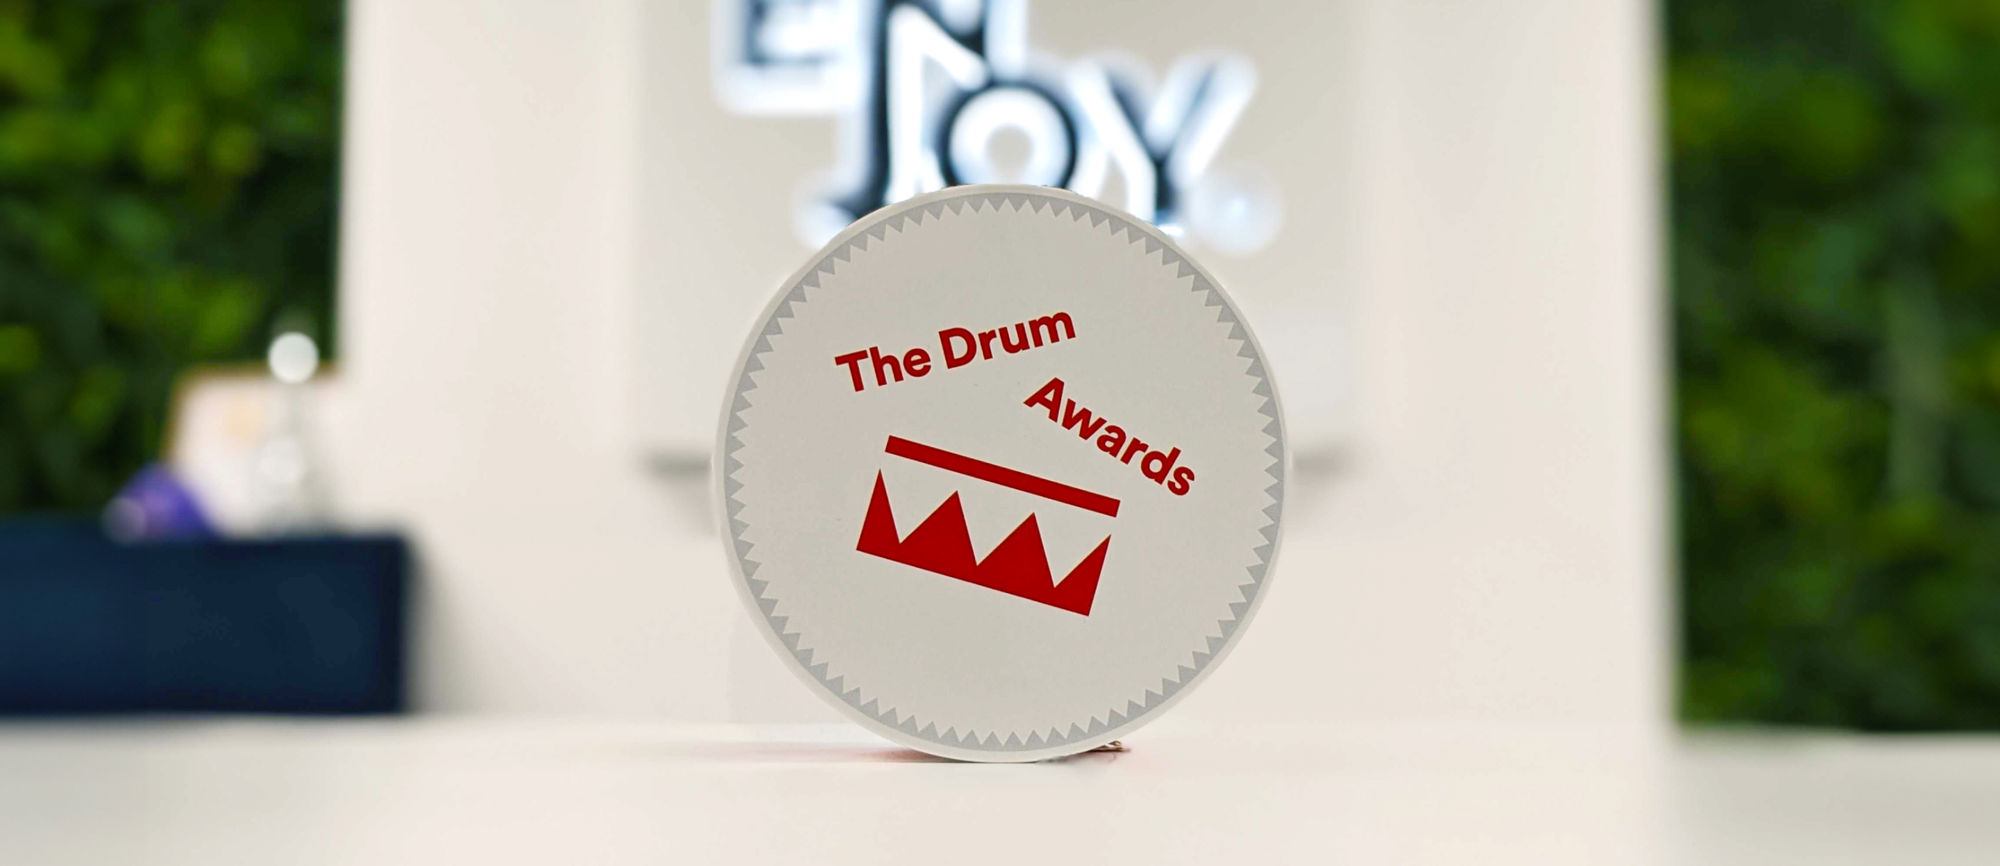 Enjoy wins Retail Award at the Drum Digital Industries